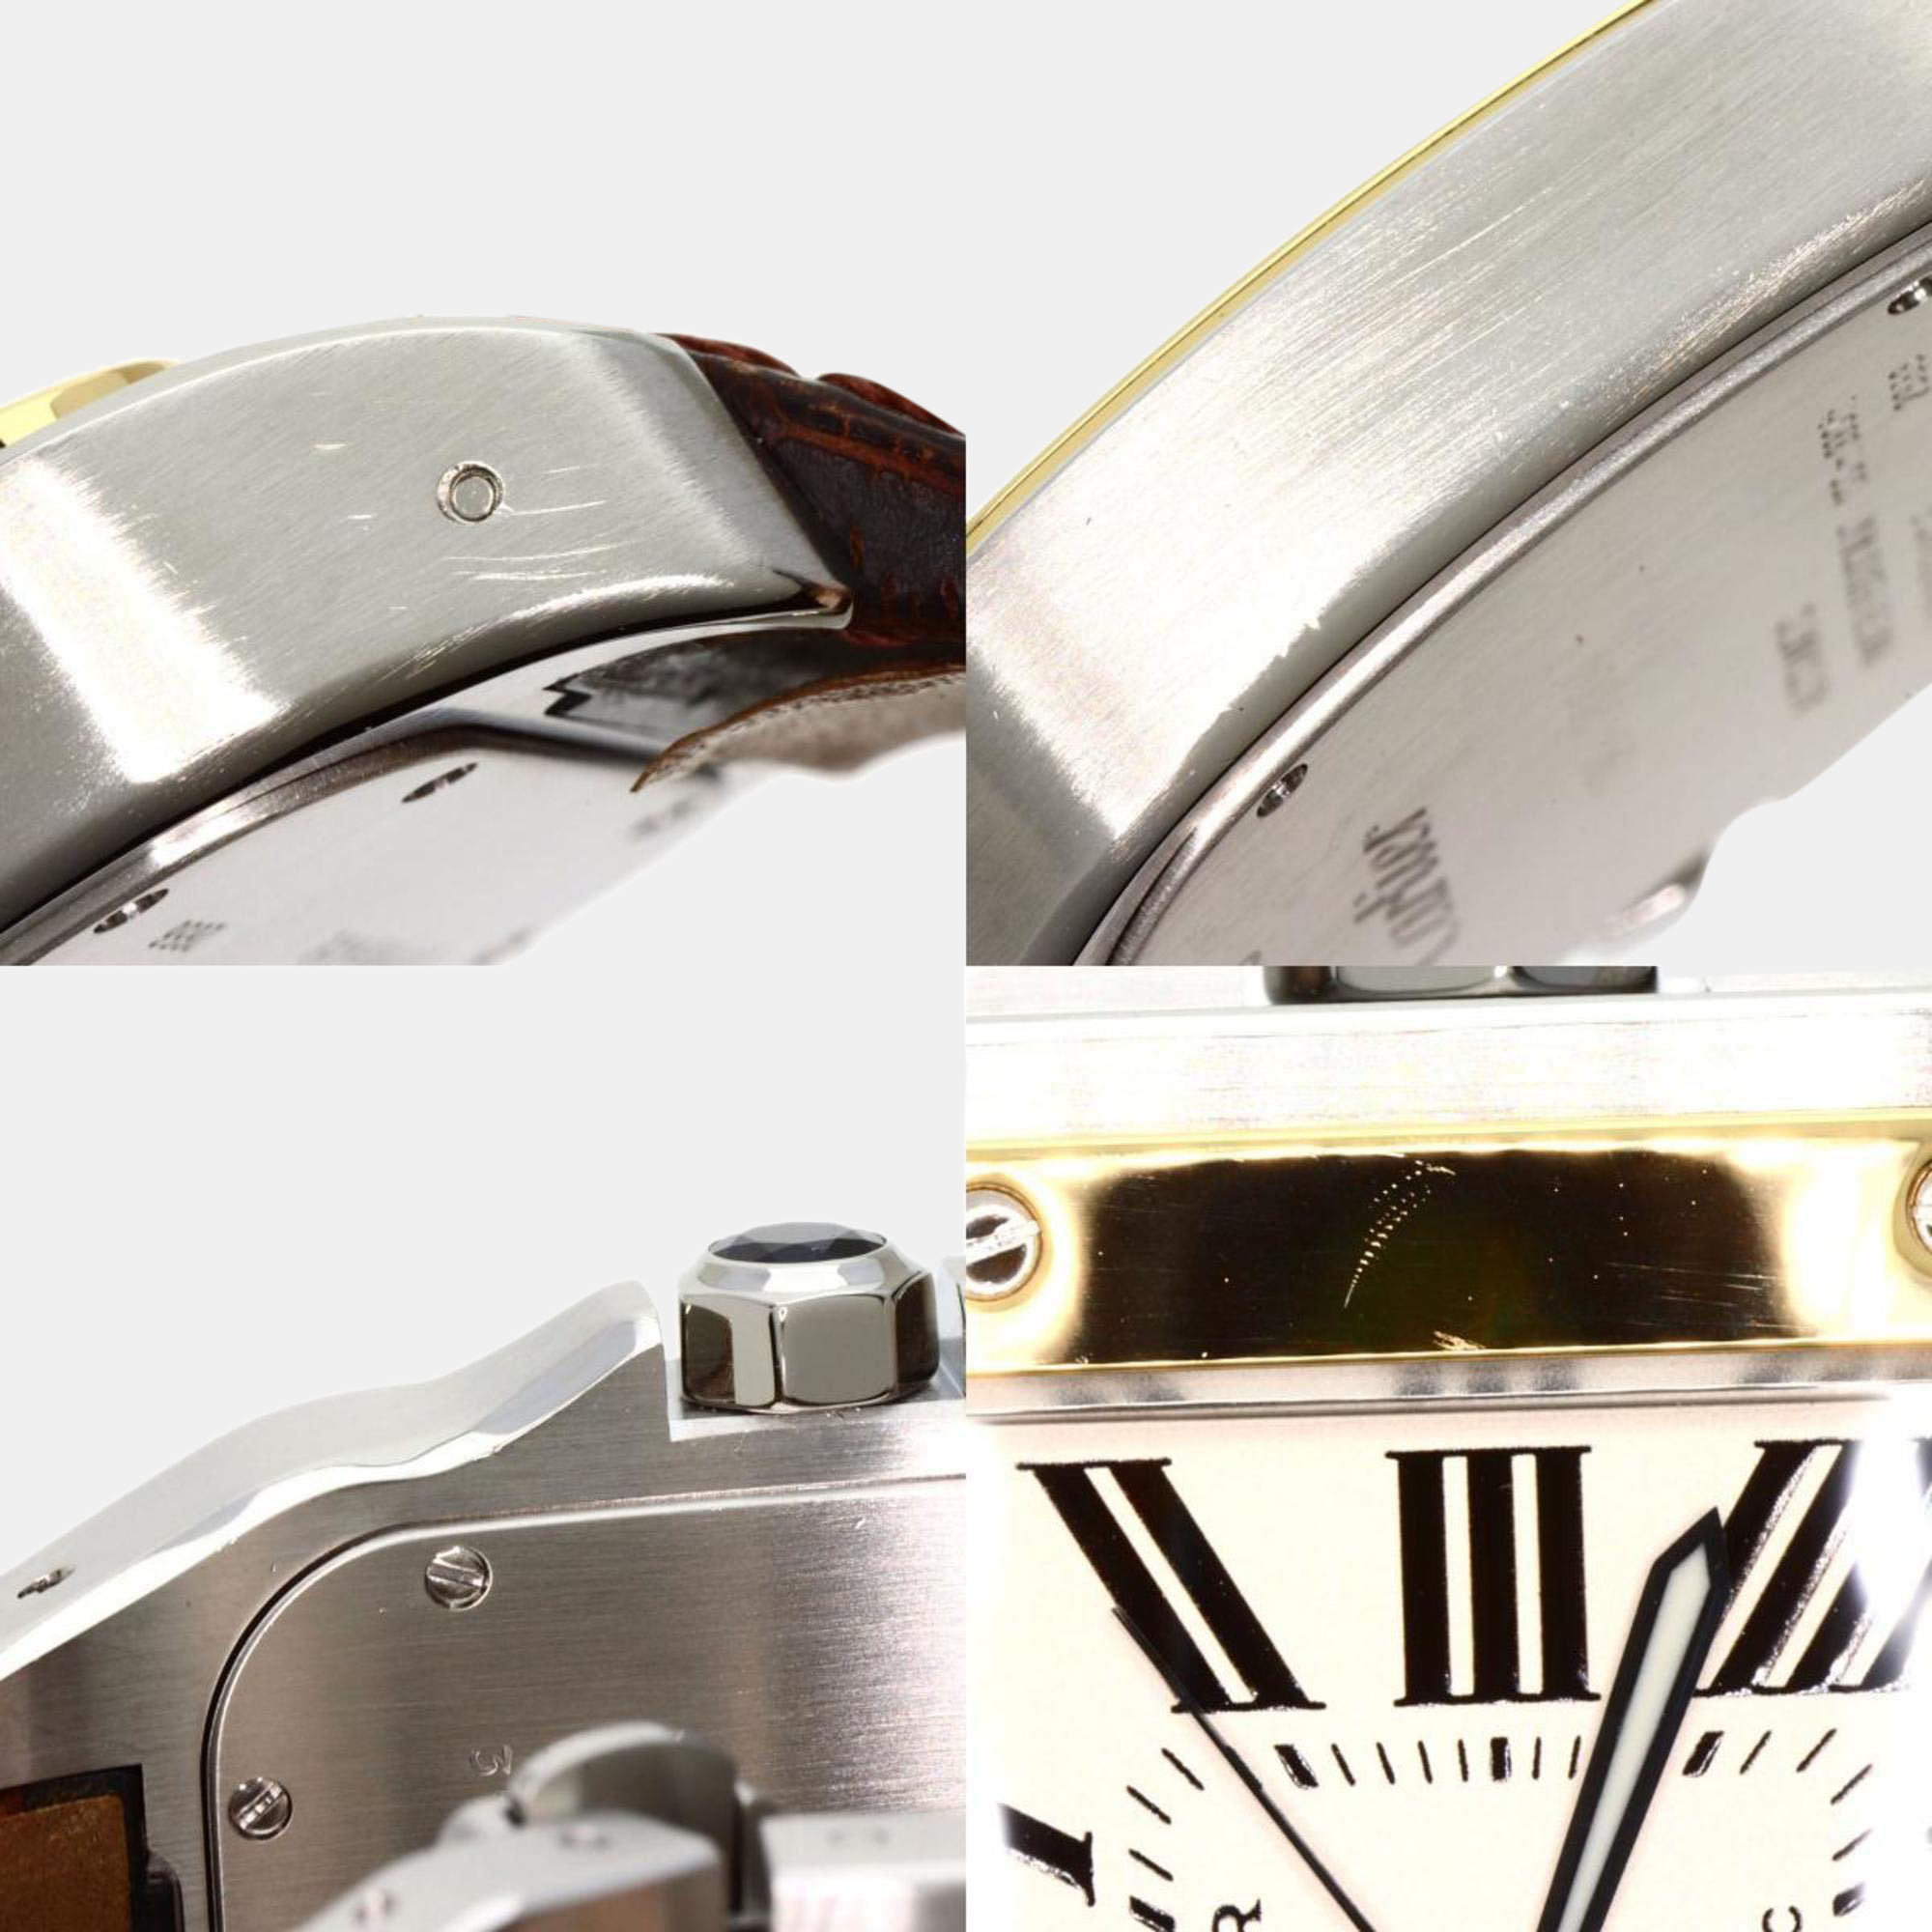 Cartier Silver Stainless Steel Santos W20077X7 Automatic Men's Wristwatch 38 Mm